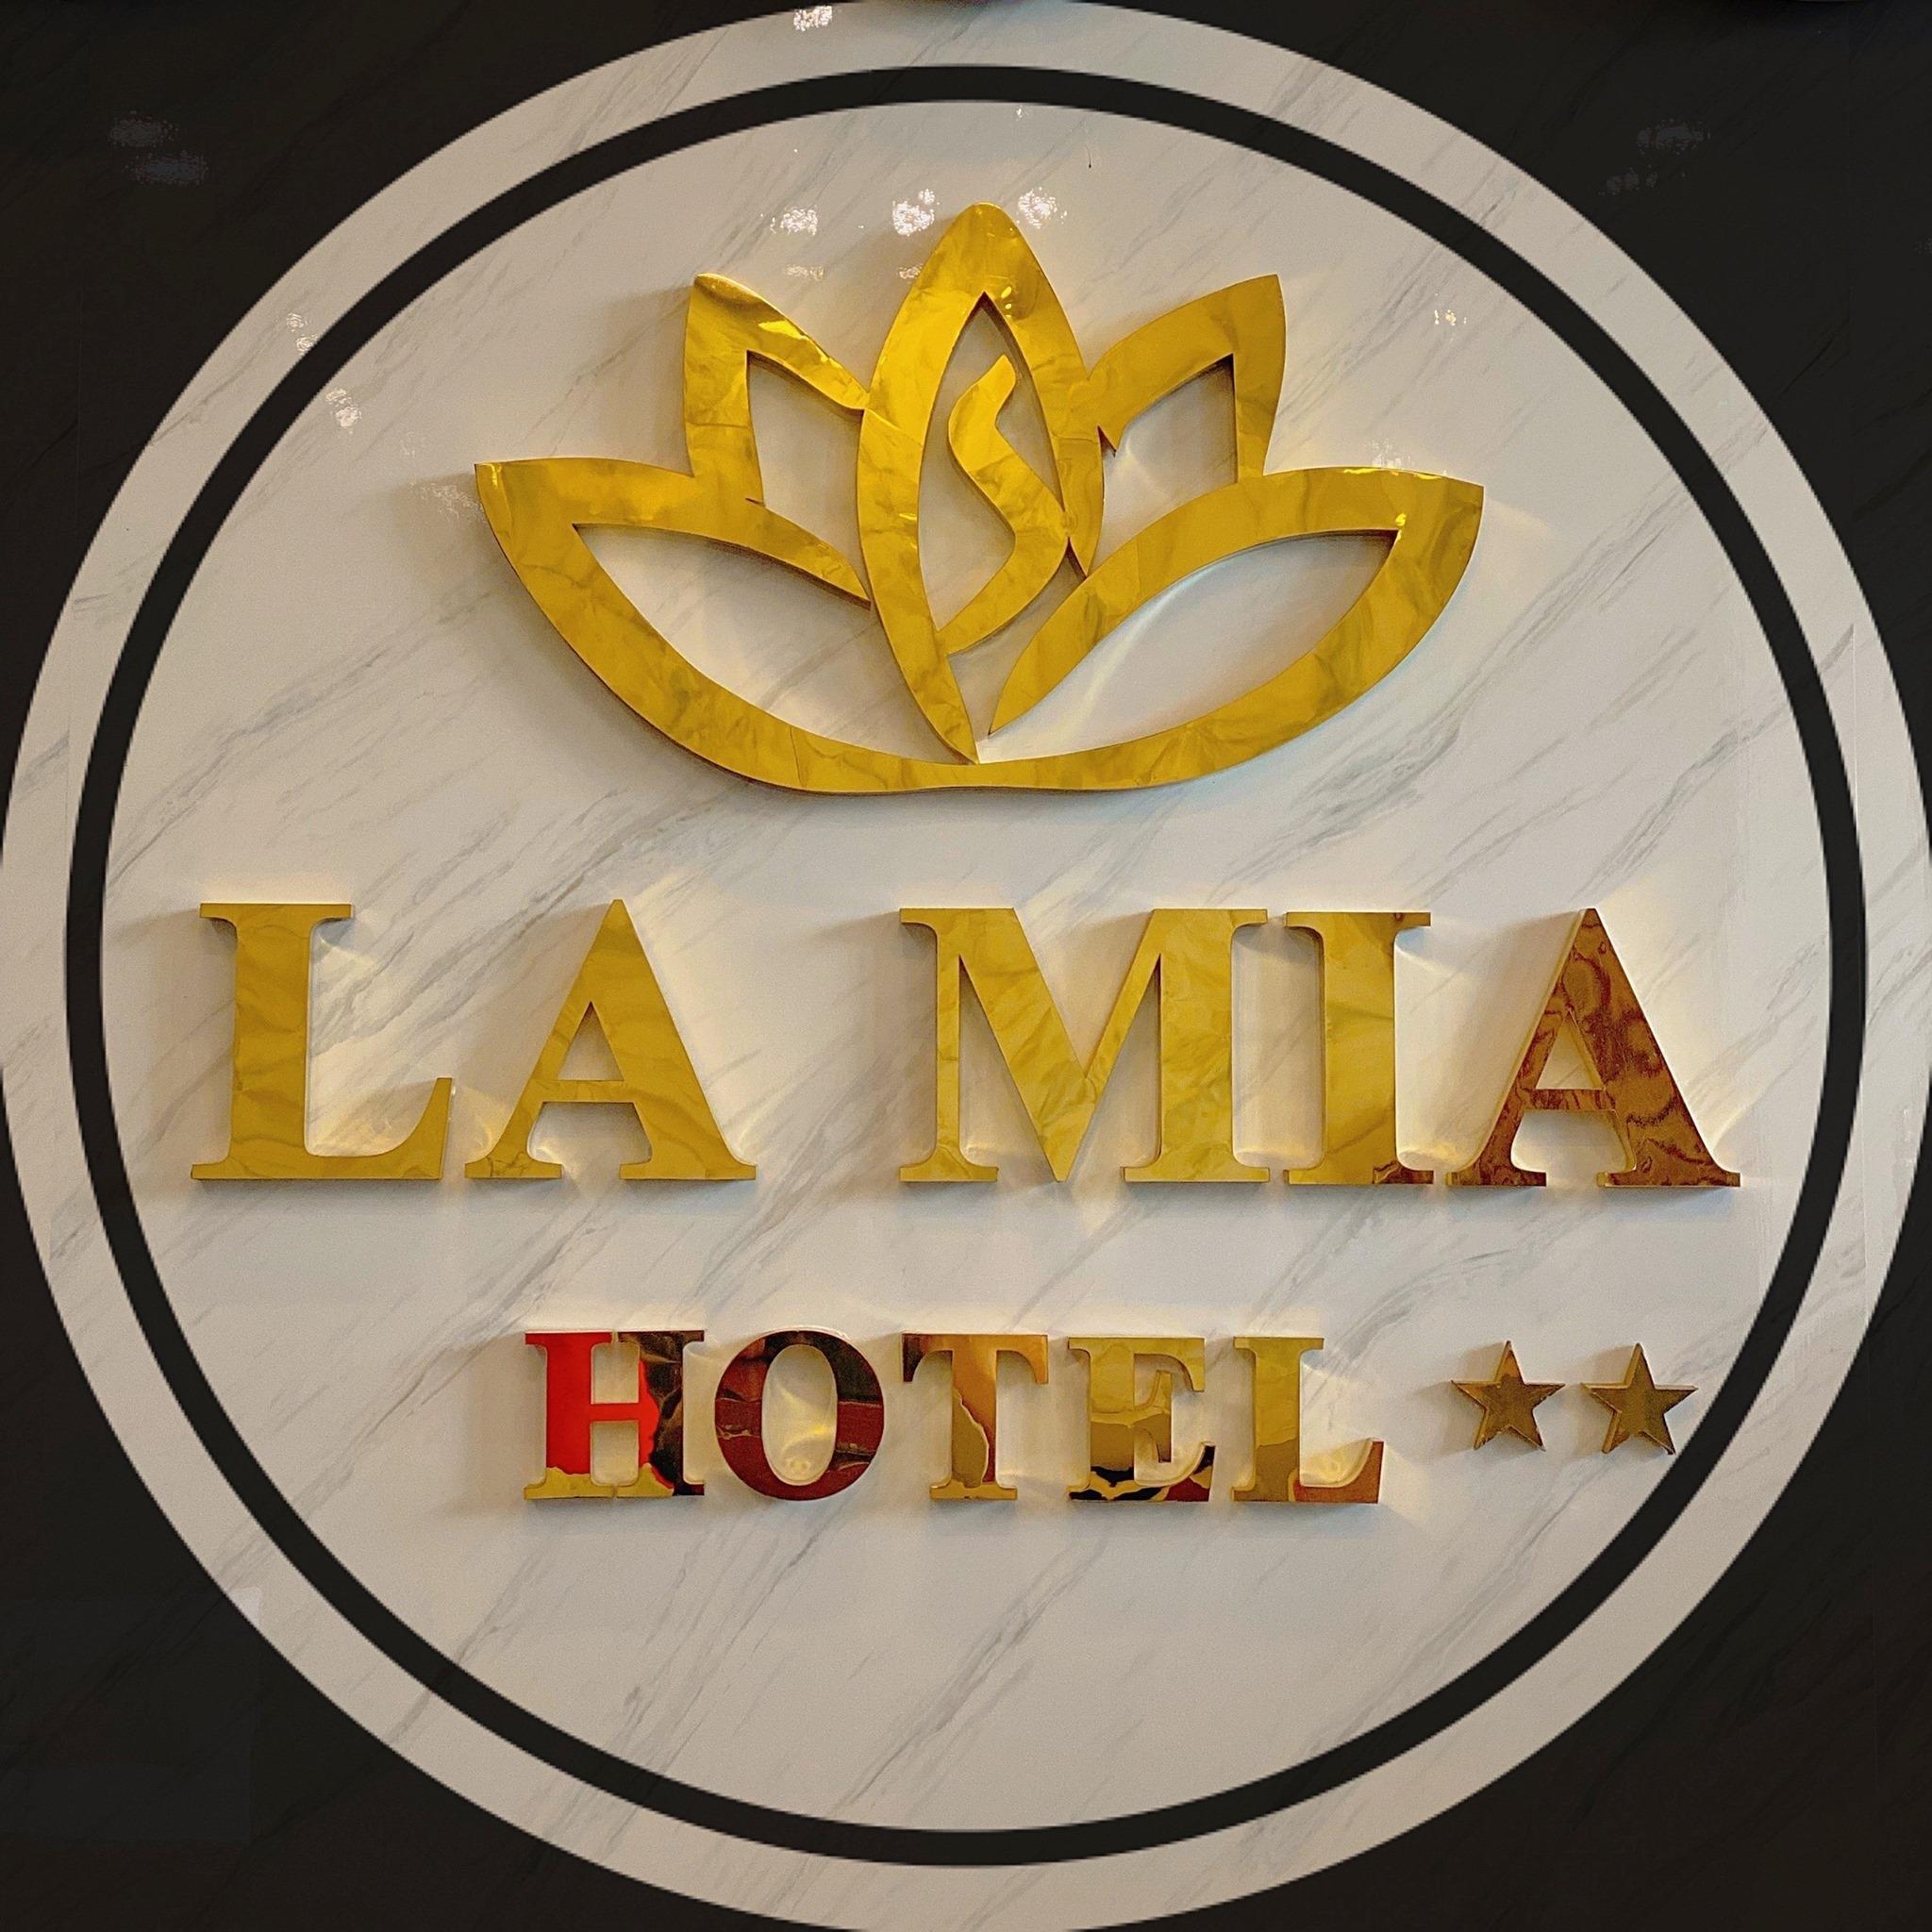 La Mia Lakeview Hotel